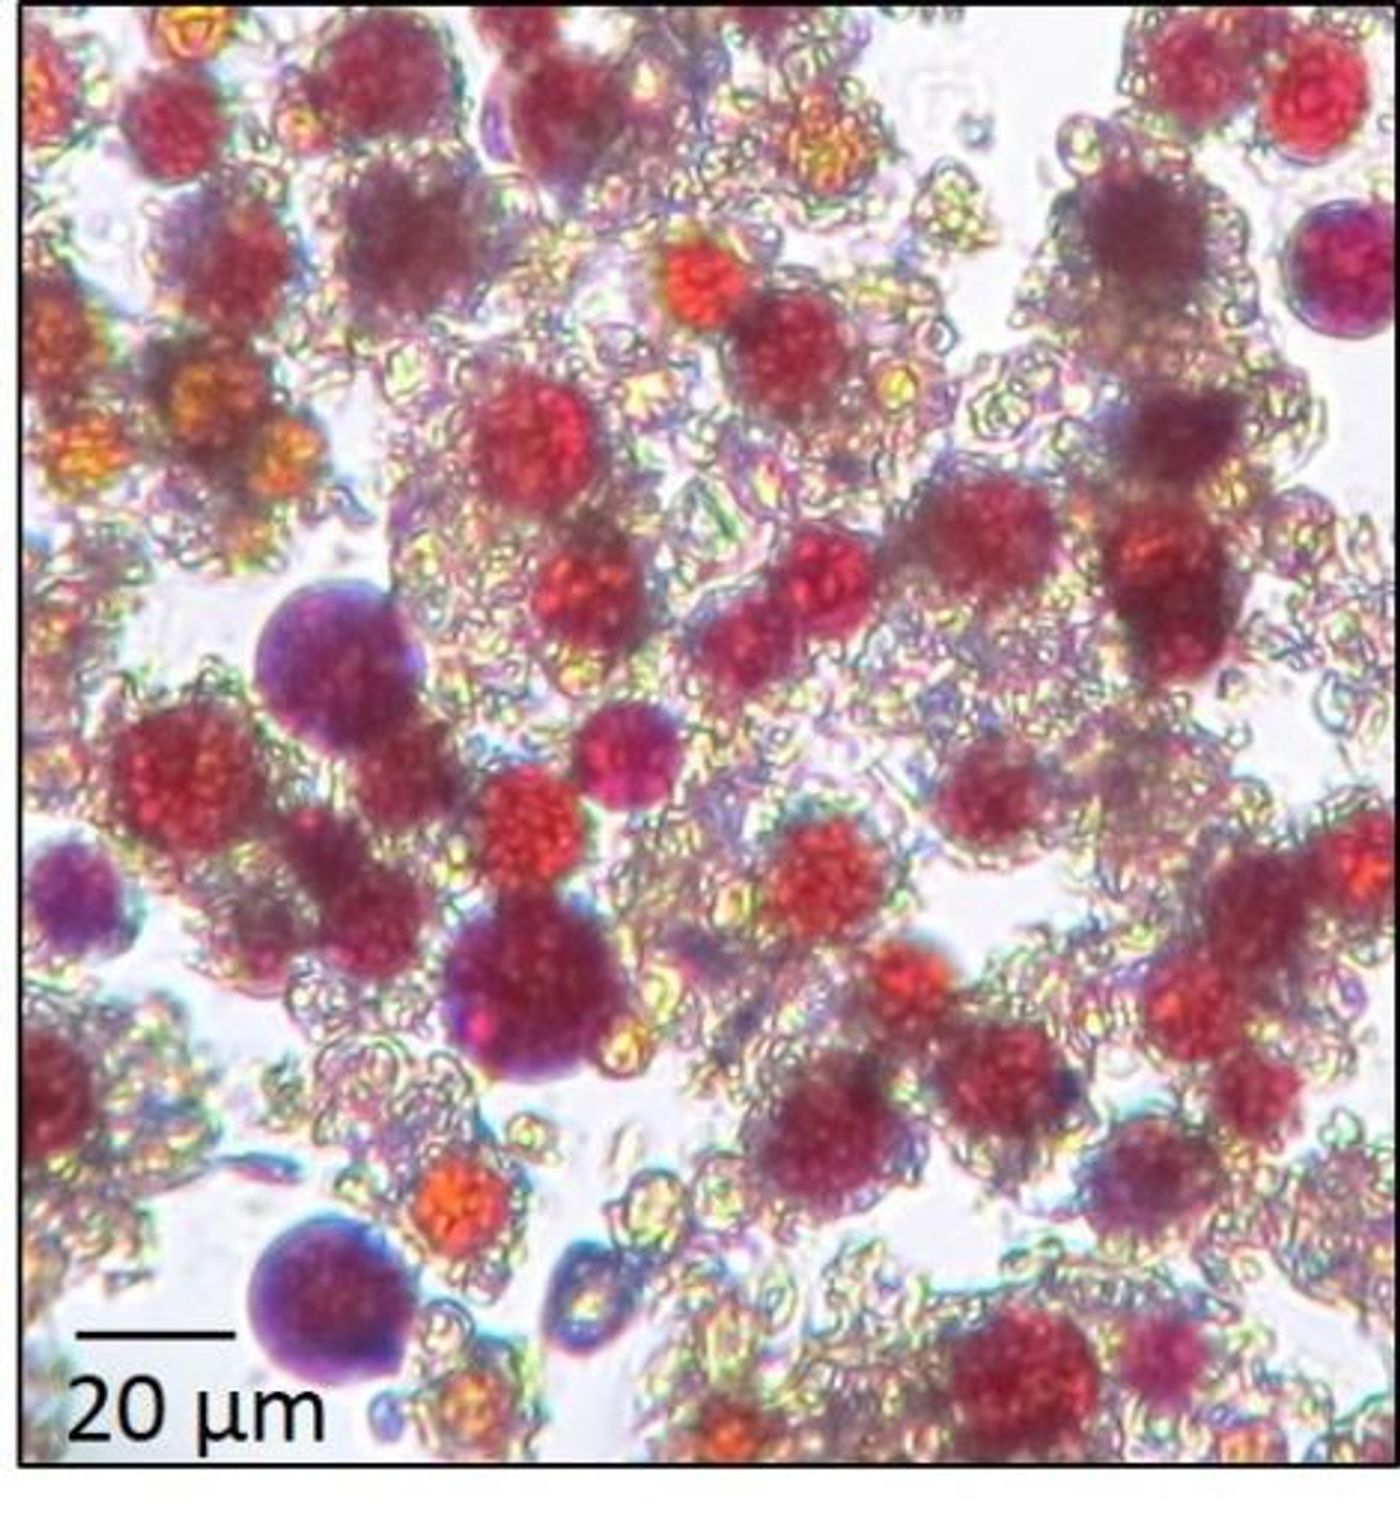 A colony of red snow algae under a microscope. Image by Stefanie Lutz/GFZ